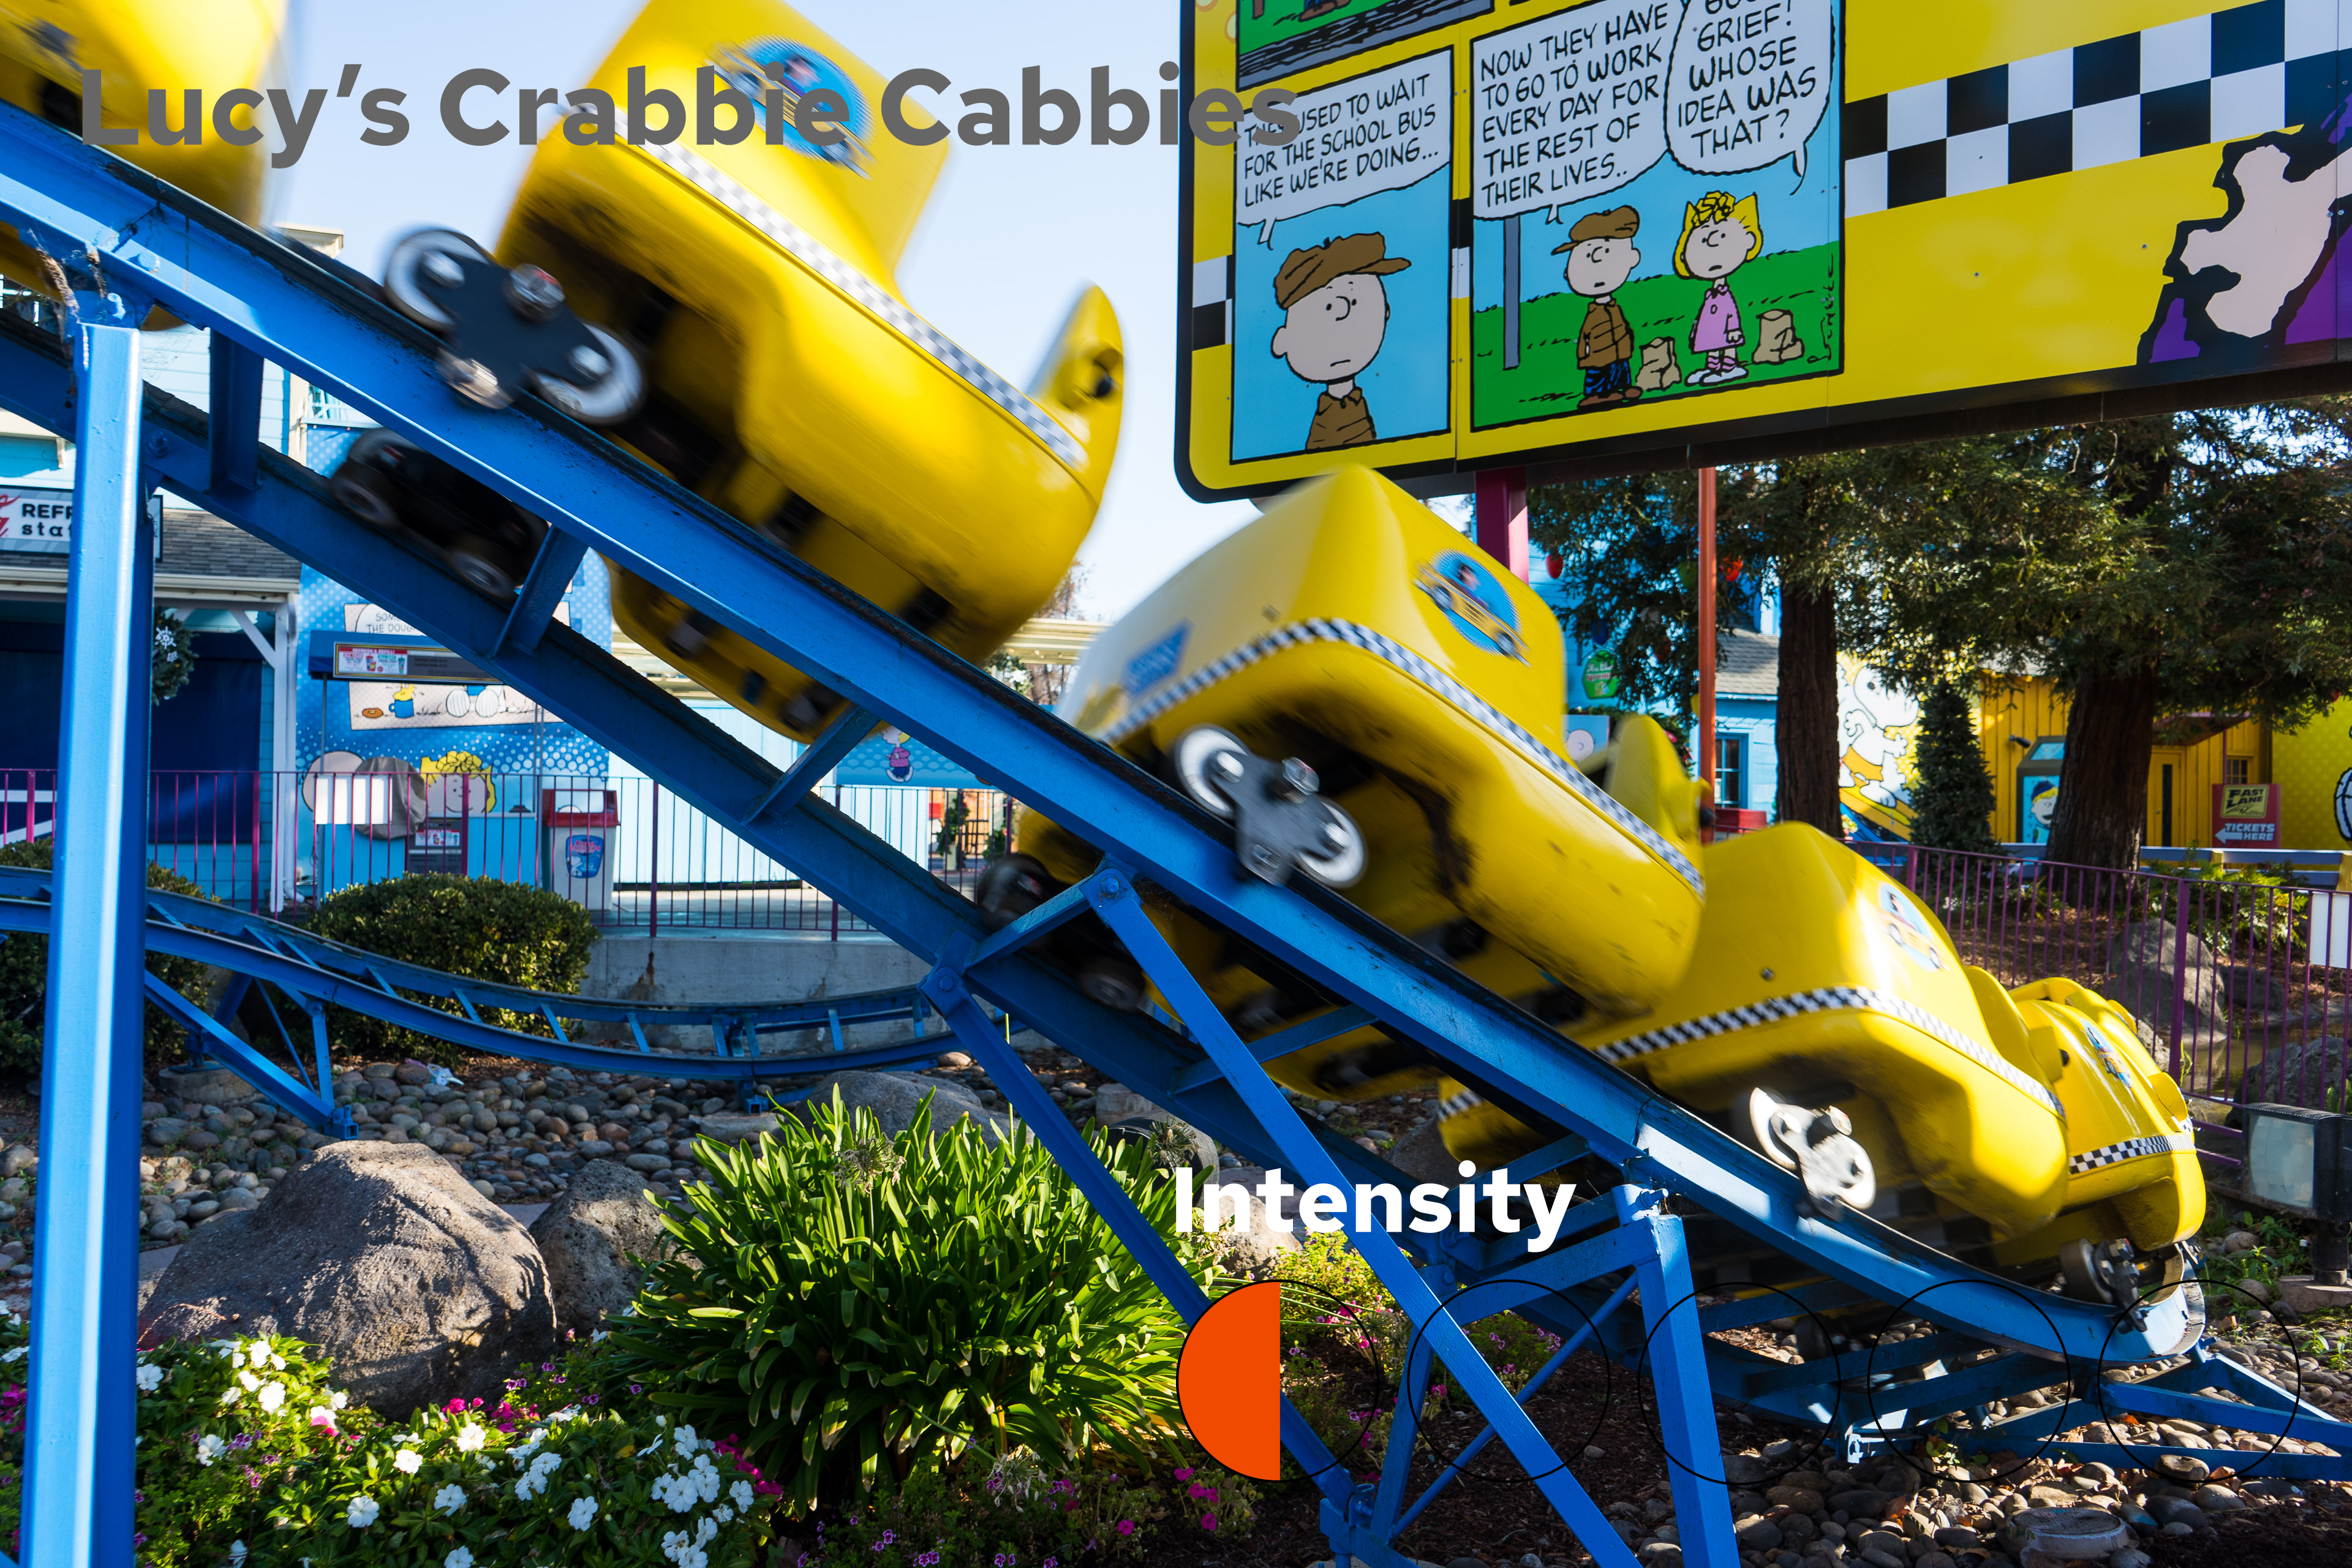 Lucy's Crabbie Cabbies Intensity